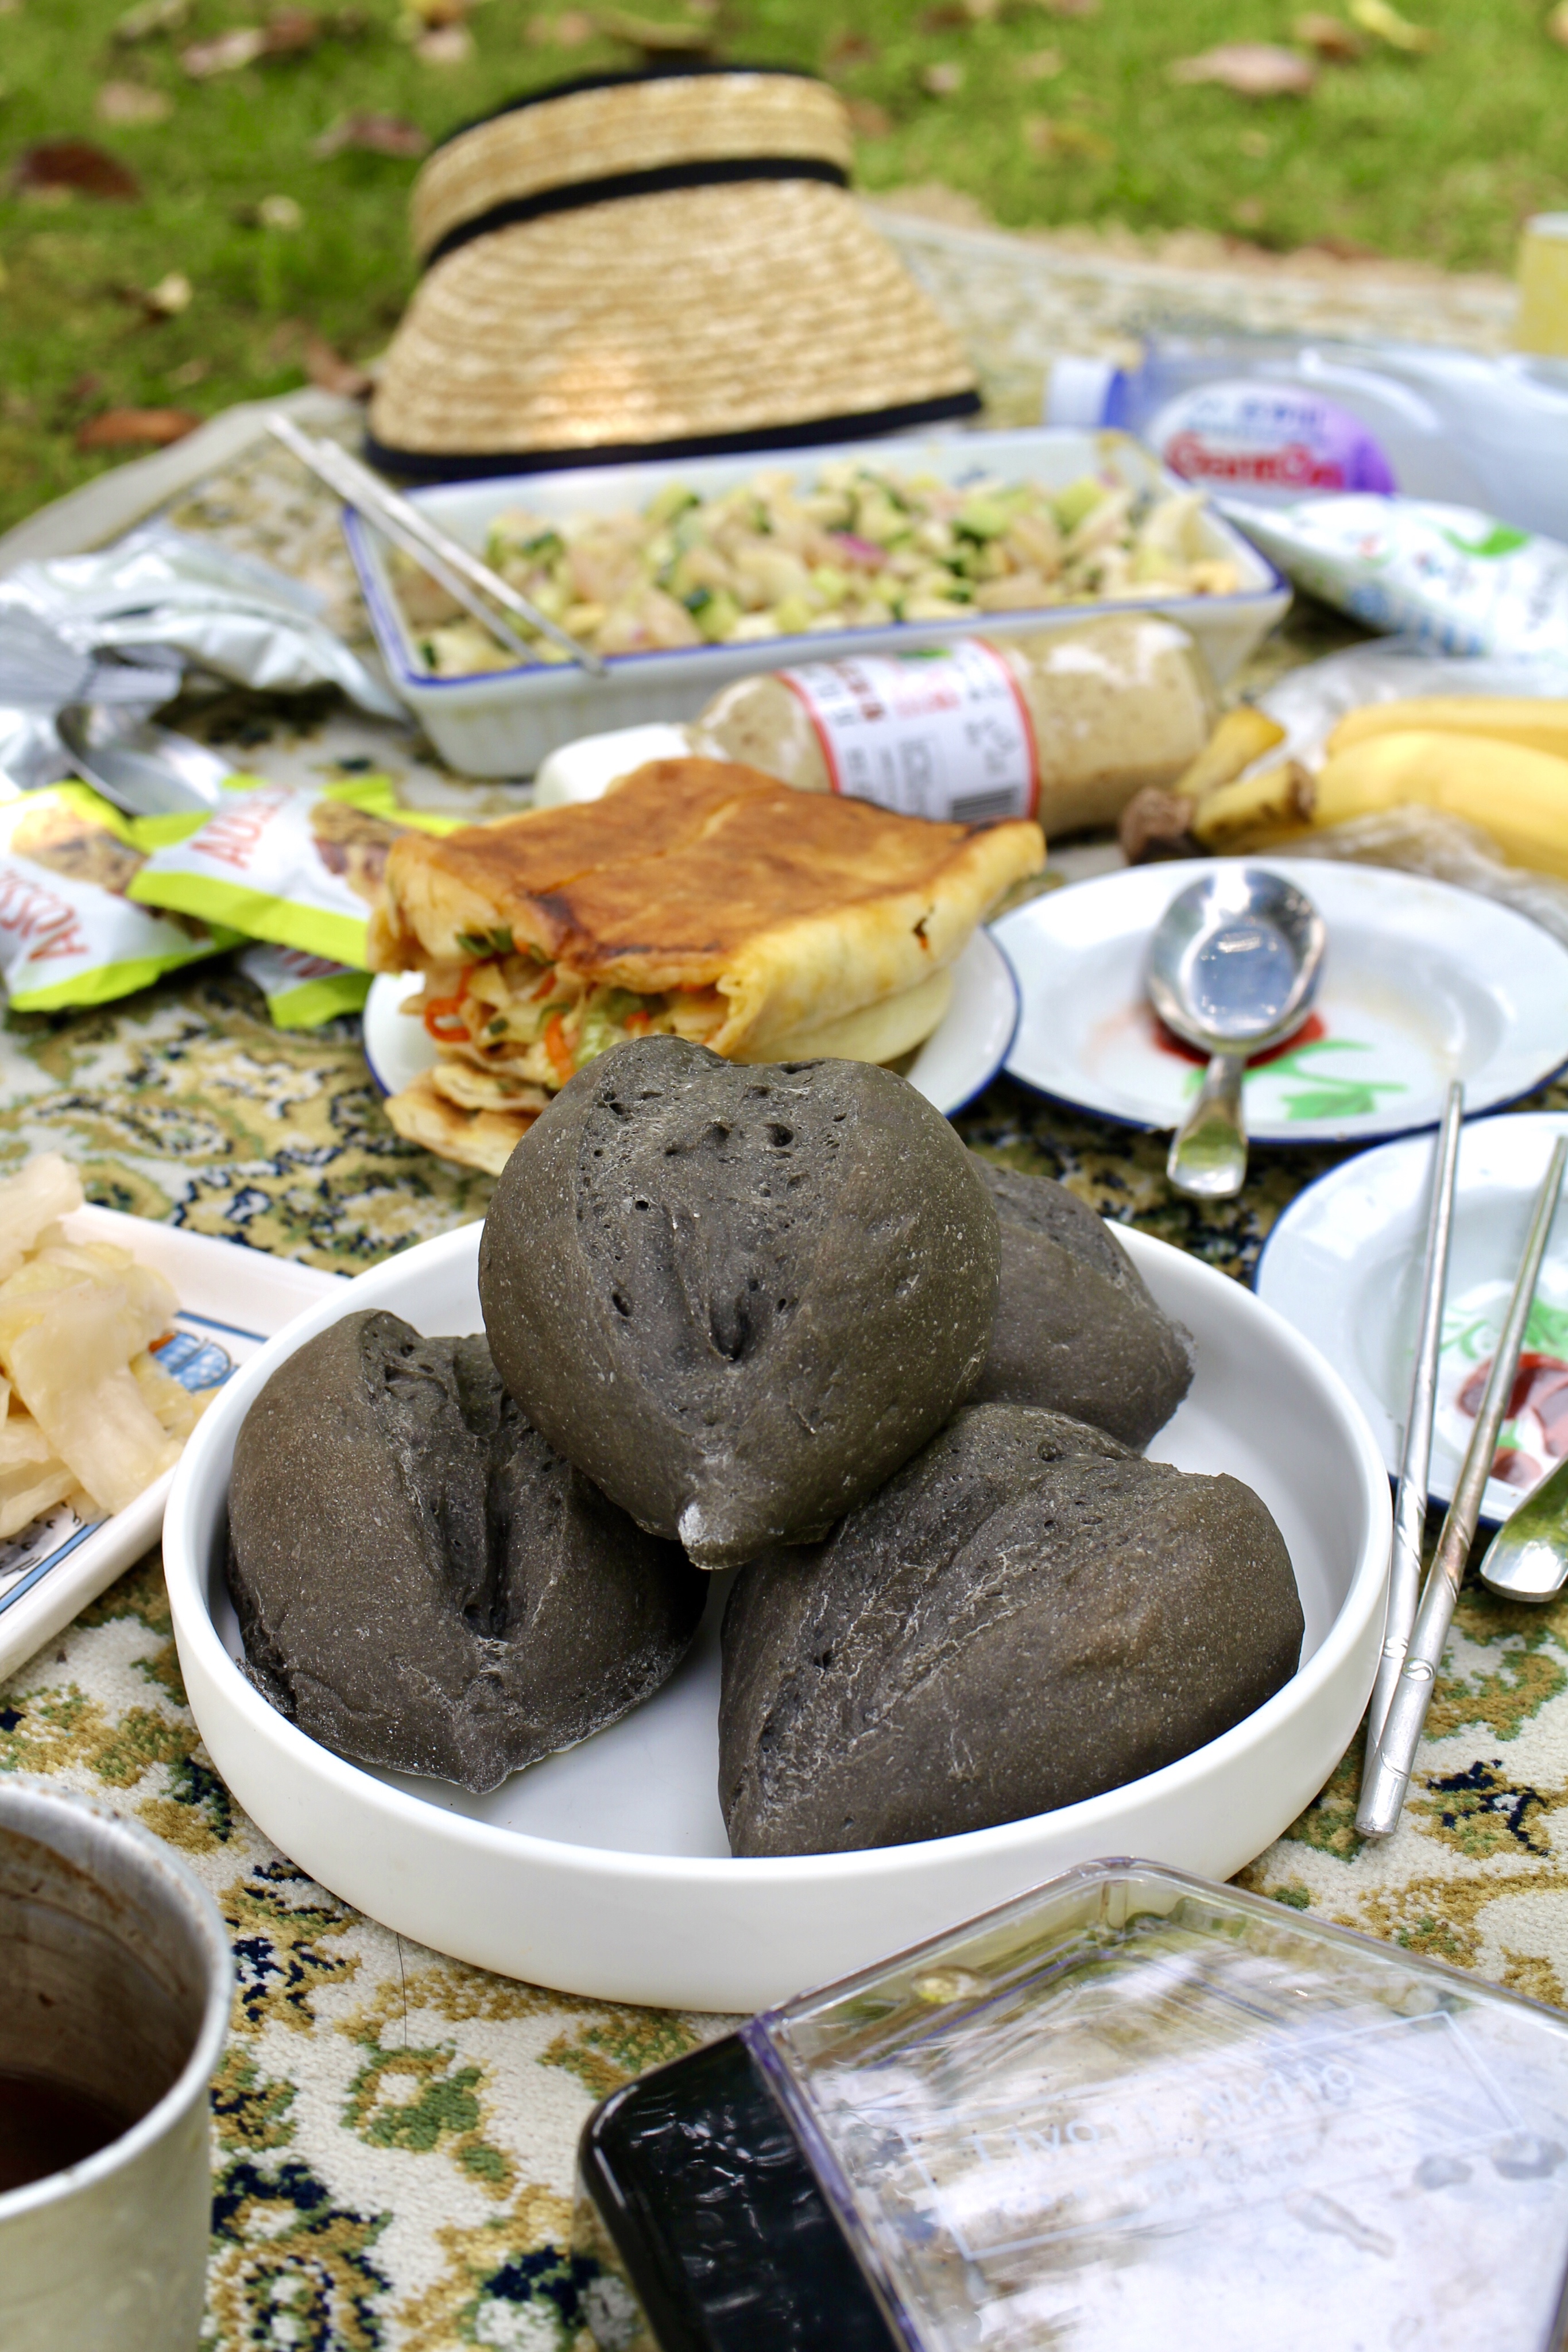 墨鱼汁小软包•黑色食物集(1)Cuttlefish Ink Black Bread•Black Colored Foods (1)